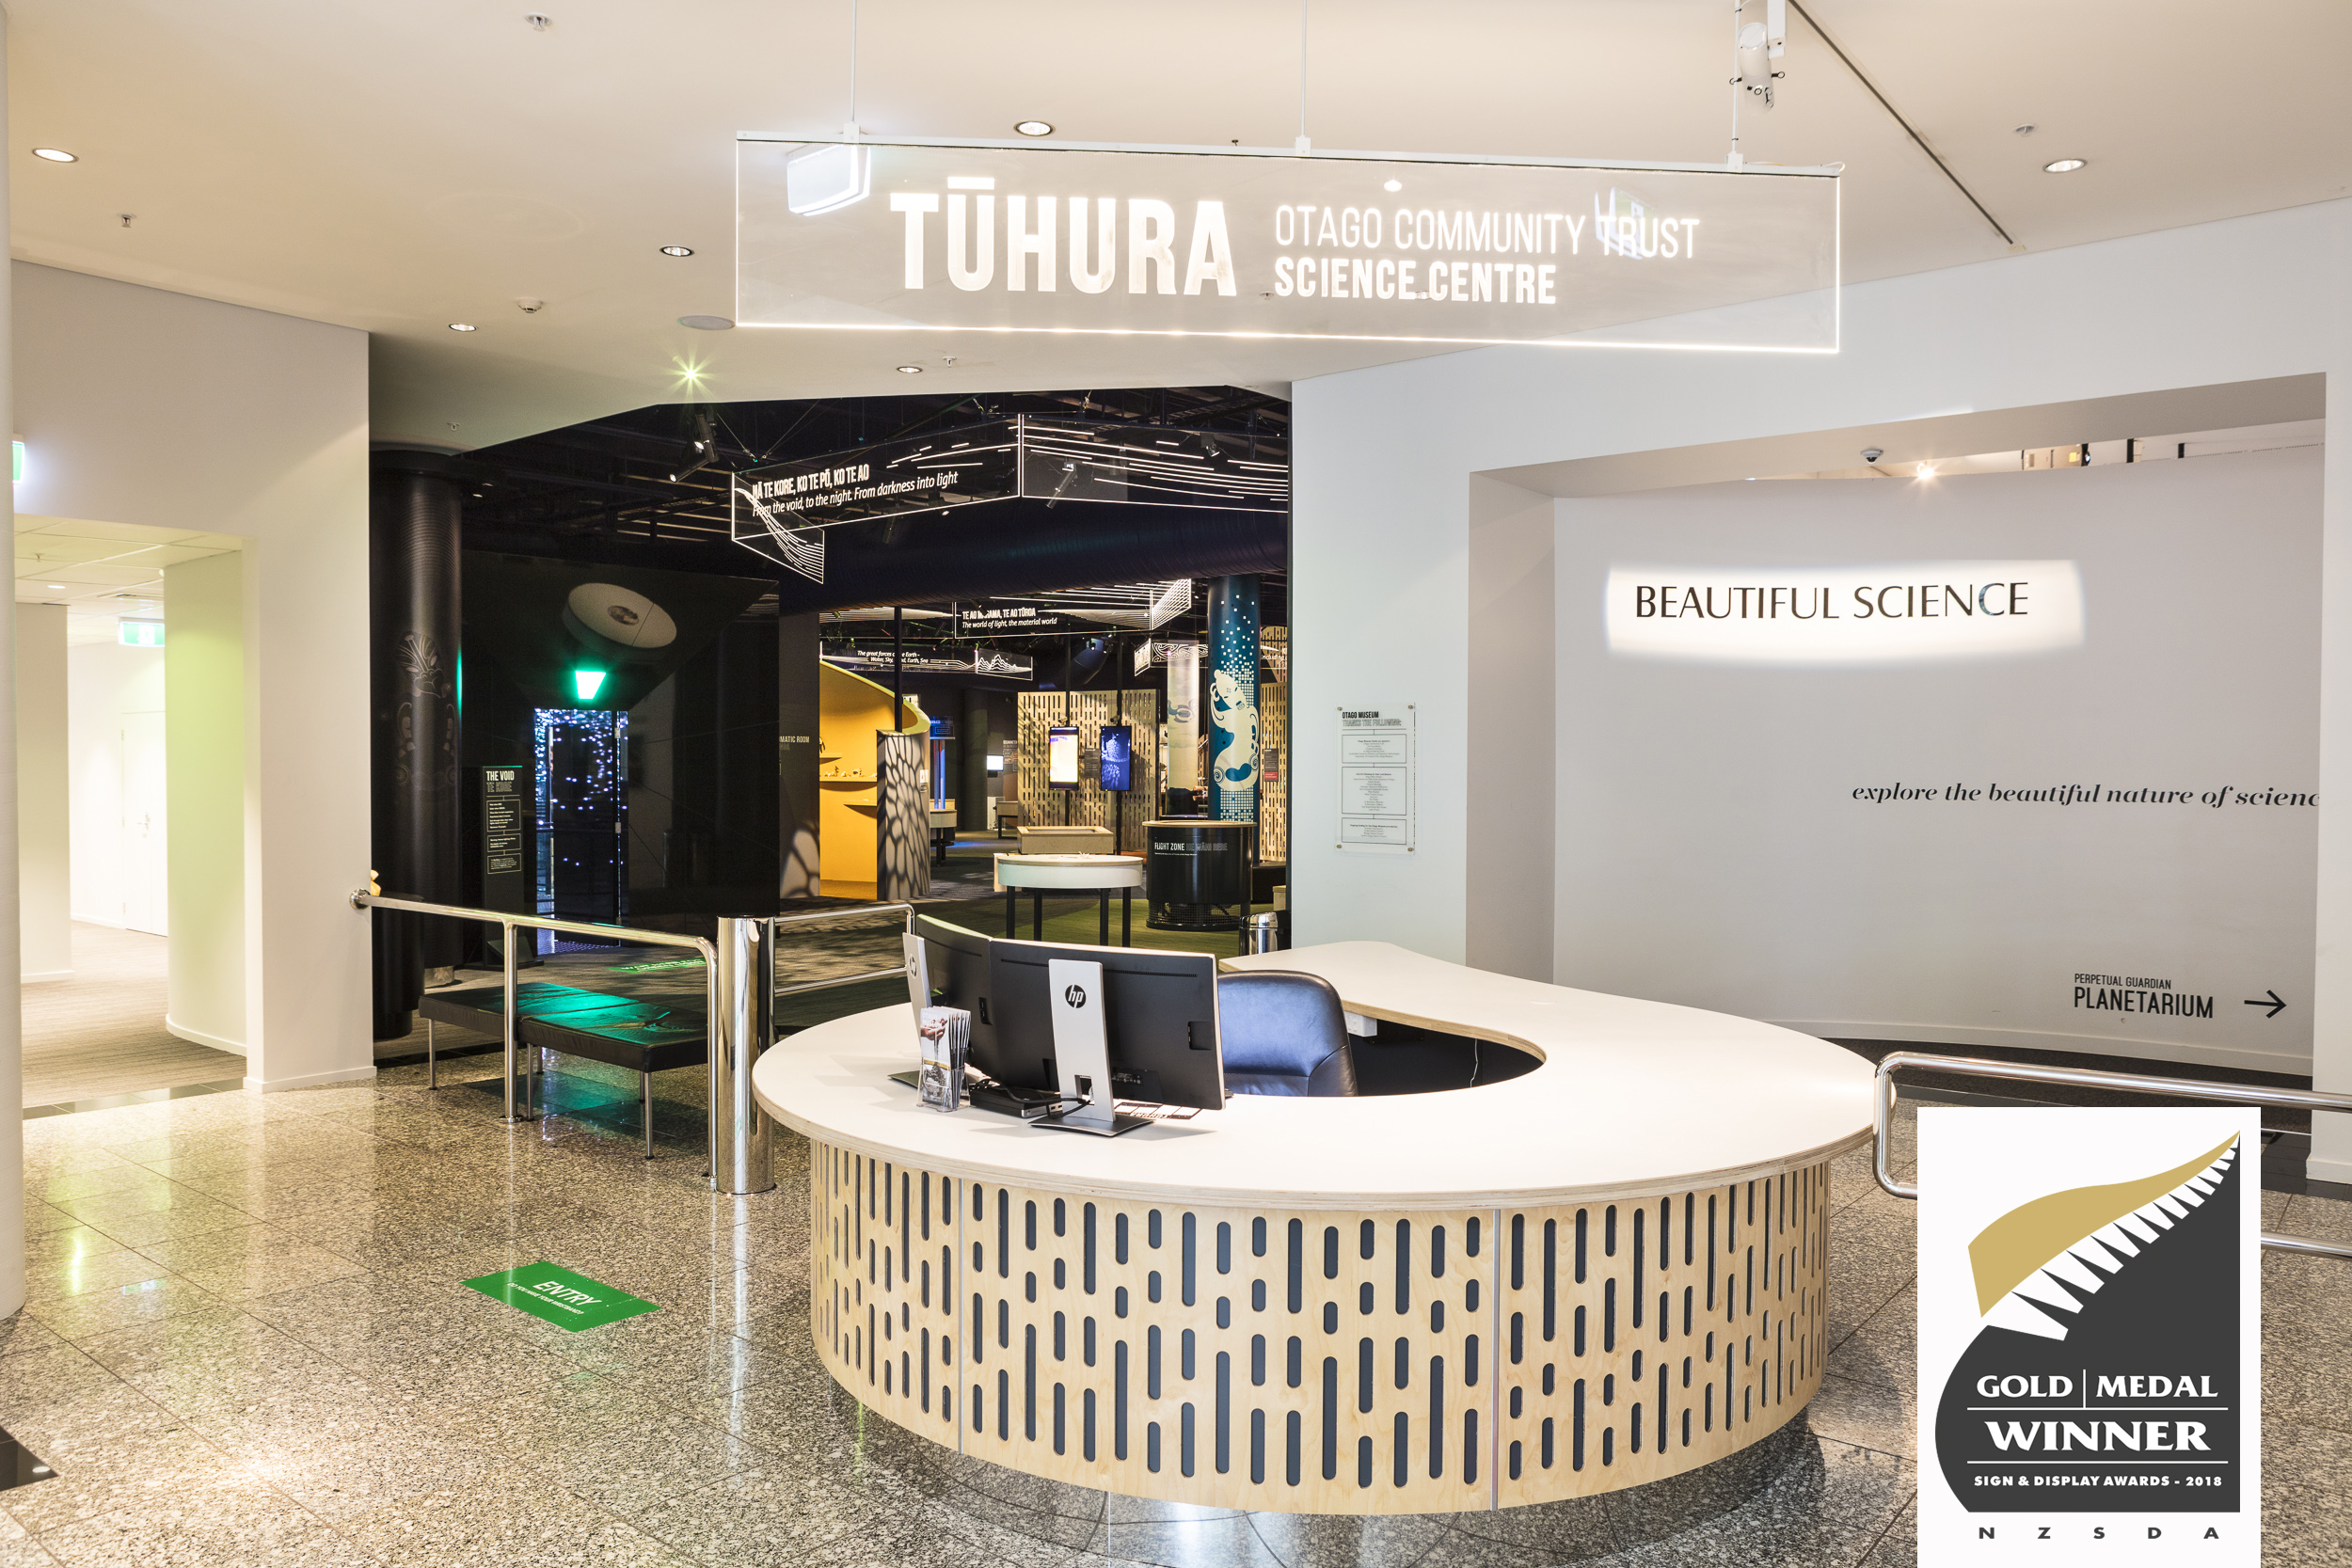 NZSDA Award winning Illuminated signage Tuhura Science Centre